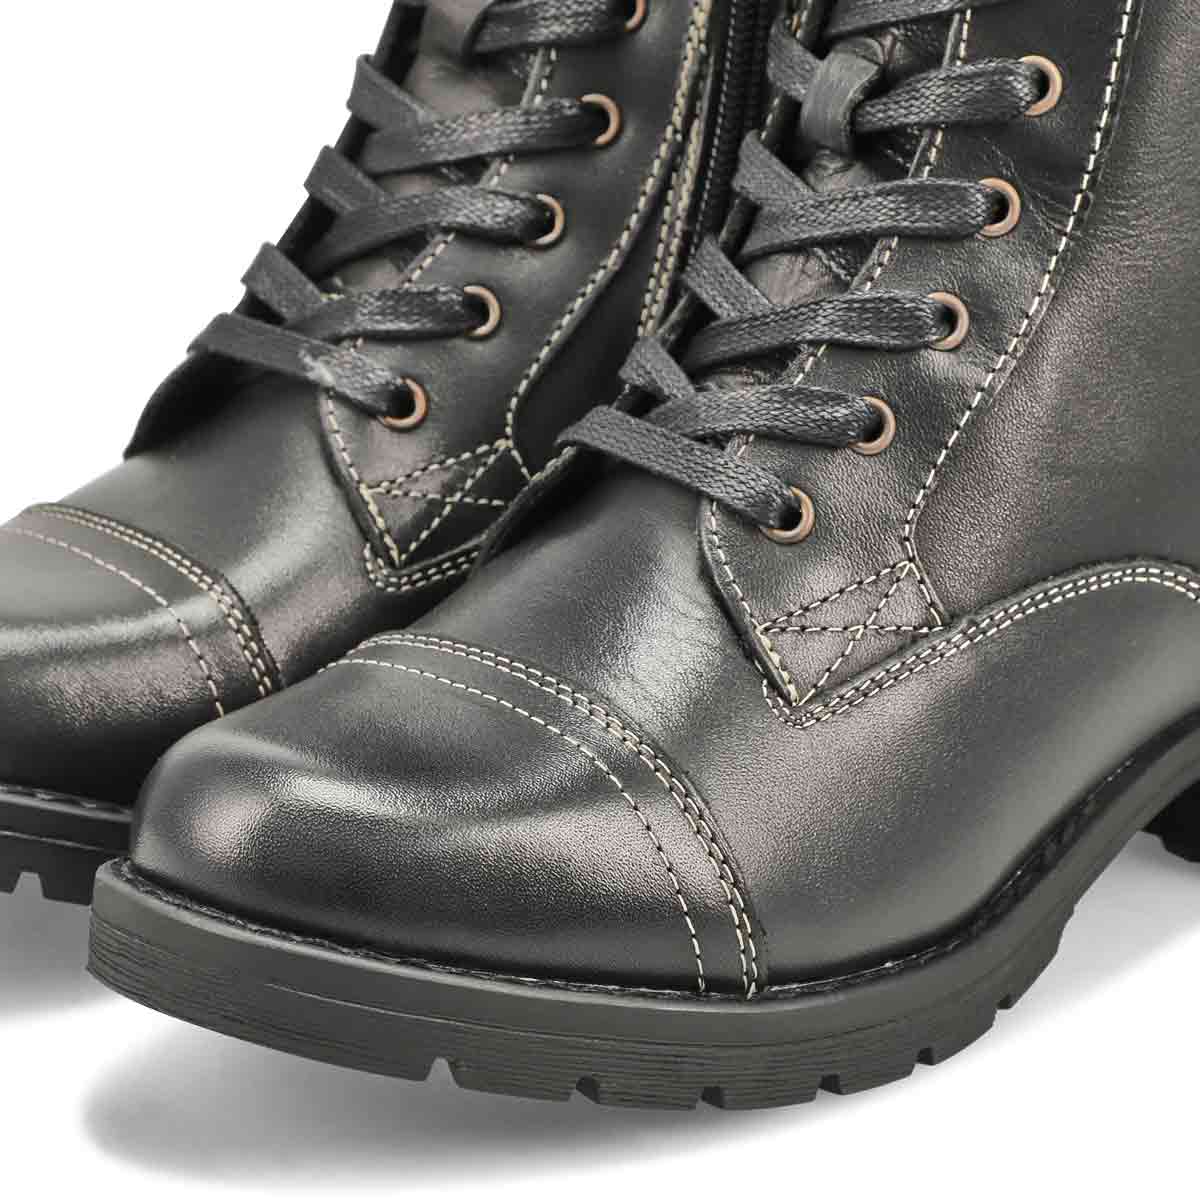 softmoc combat boots